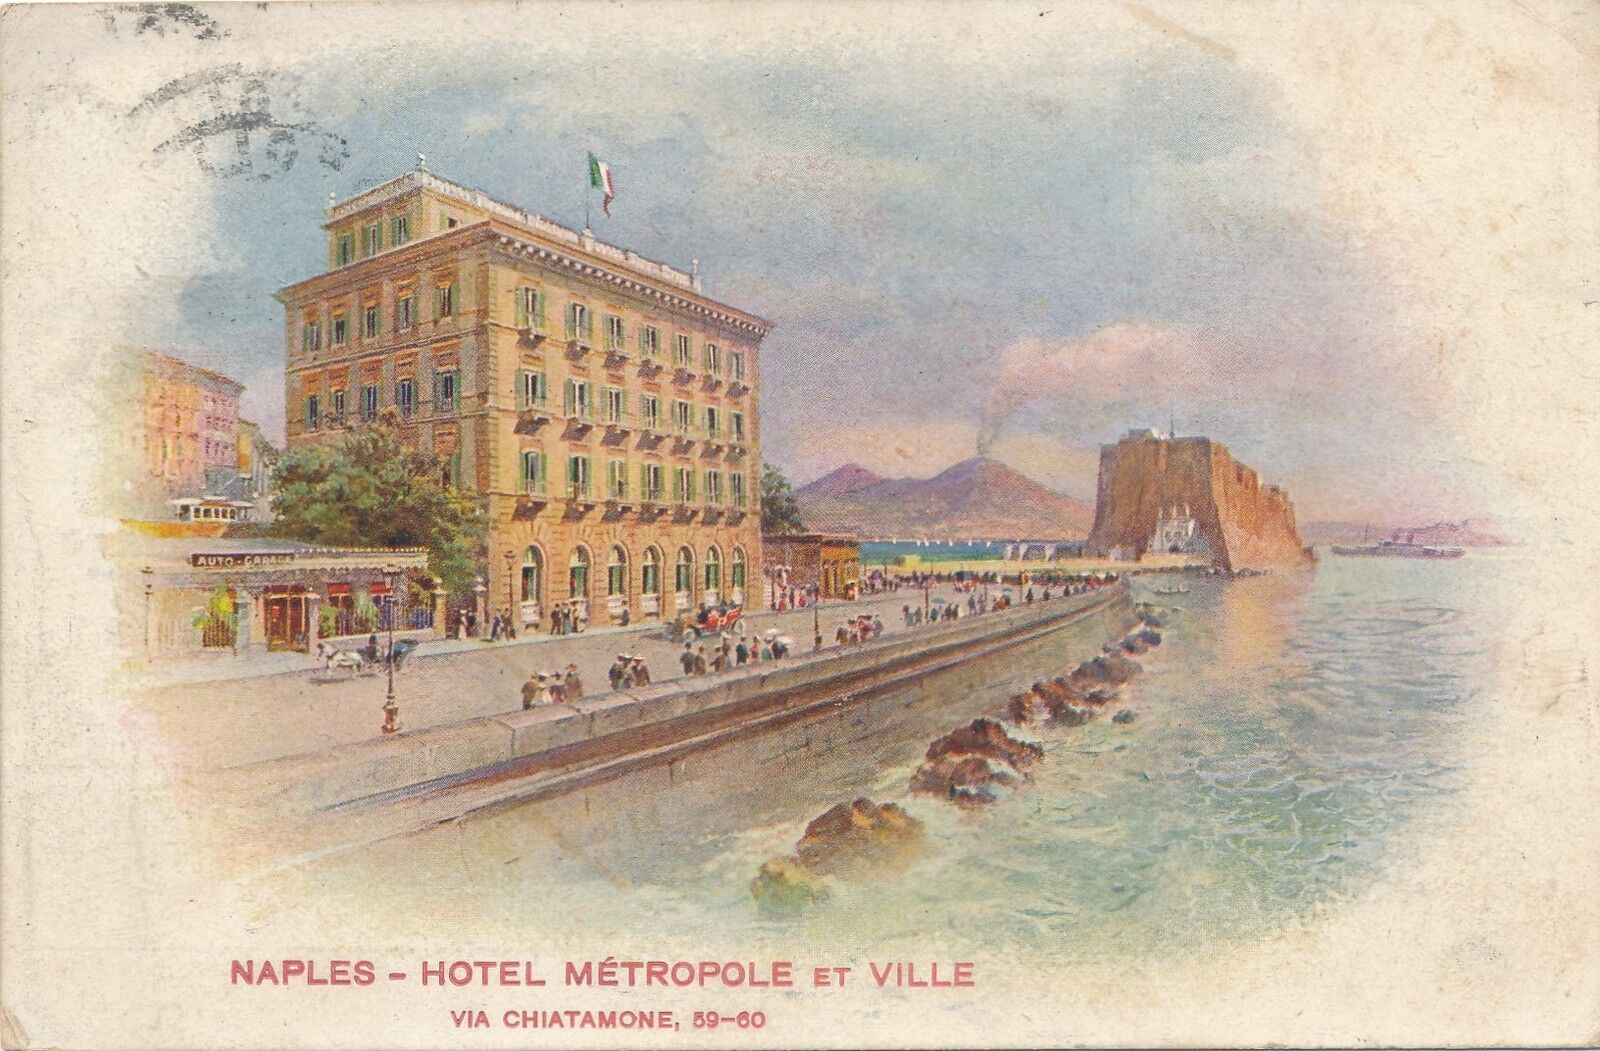 NAPOLI – Hotel Metropole et Ville – Naples – Italy - 1914